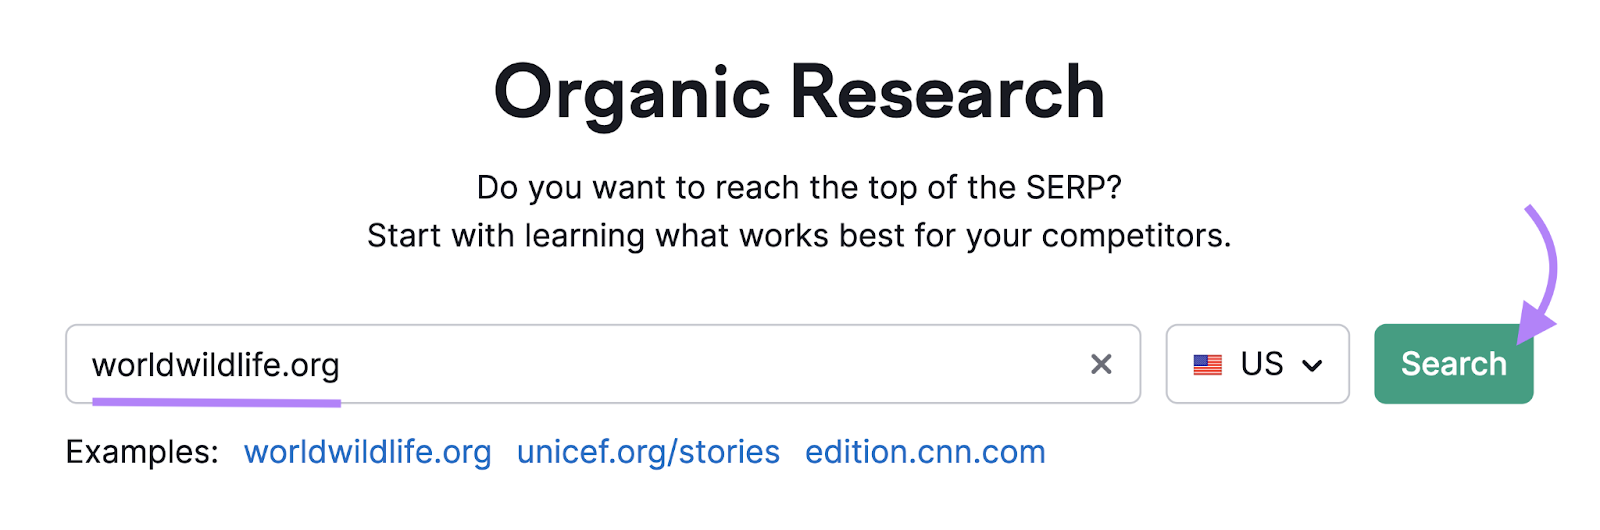 worldwildlife.org entered into organic research tool